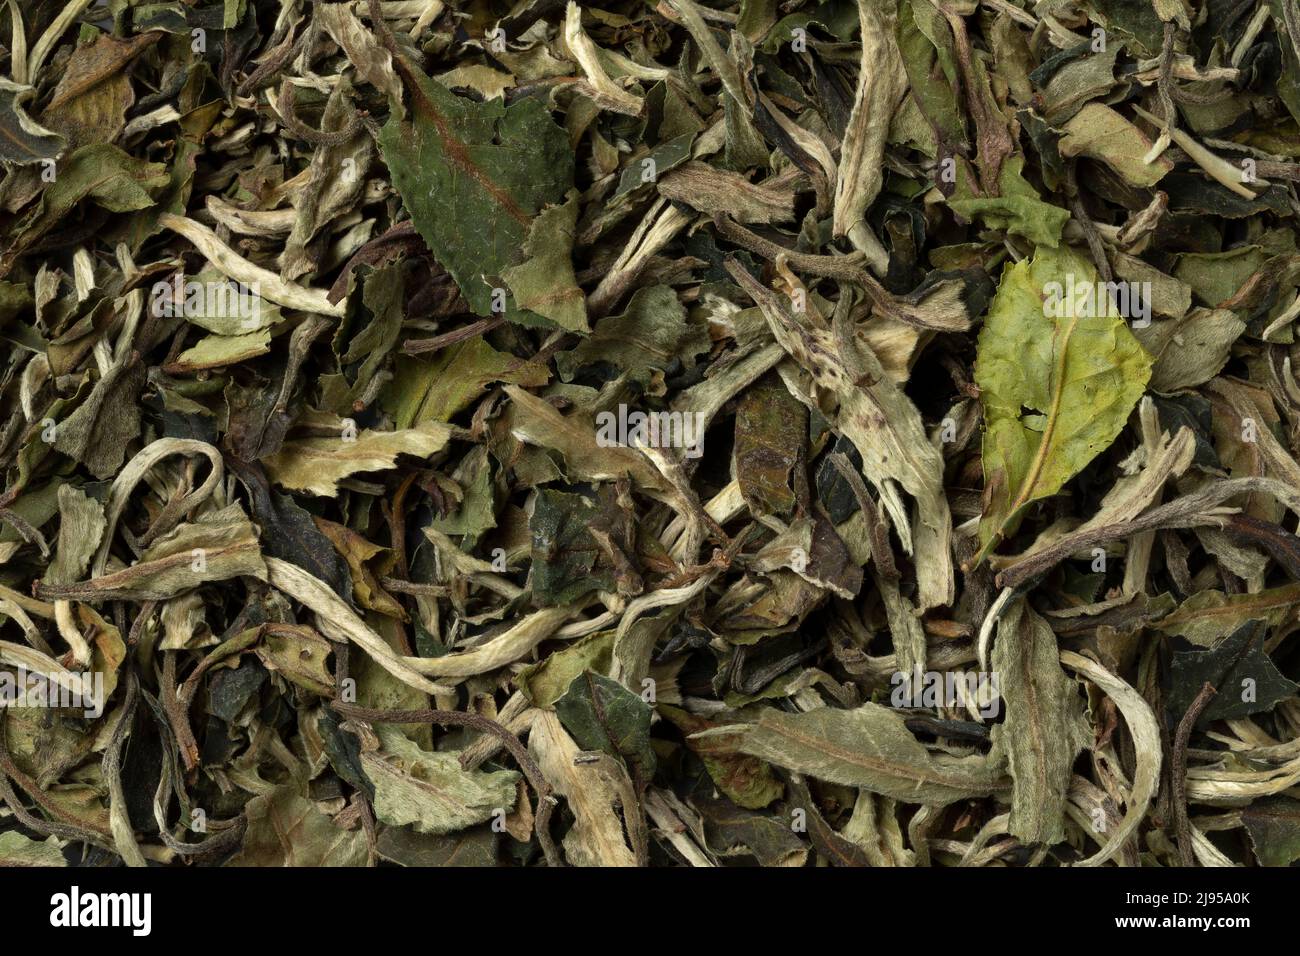 Chinese Bai Mudan, Pai Mu Tan dried tea leaves close up full frame as background Stock Photo